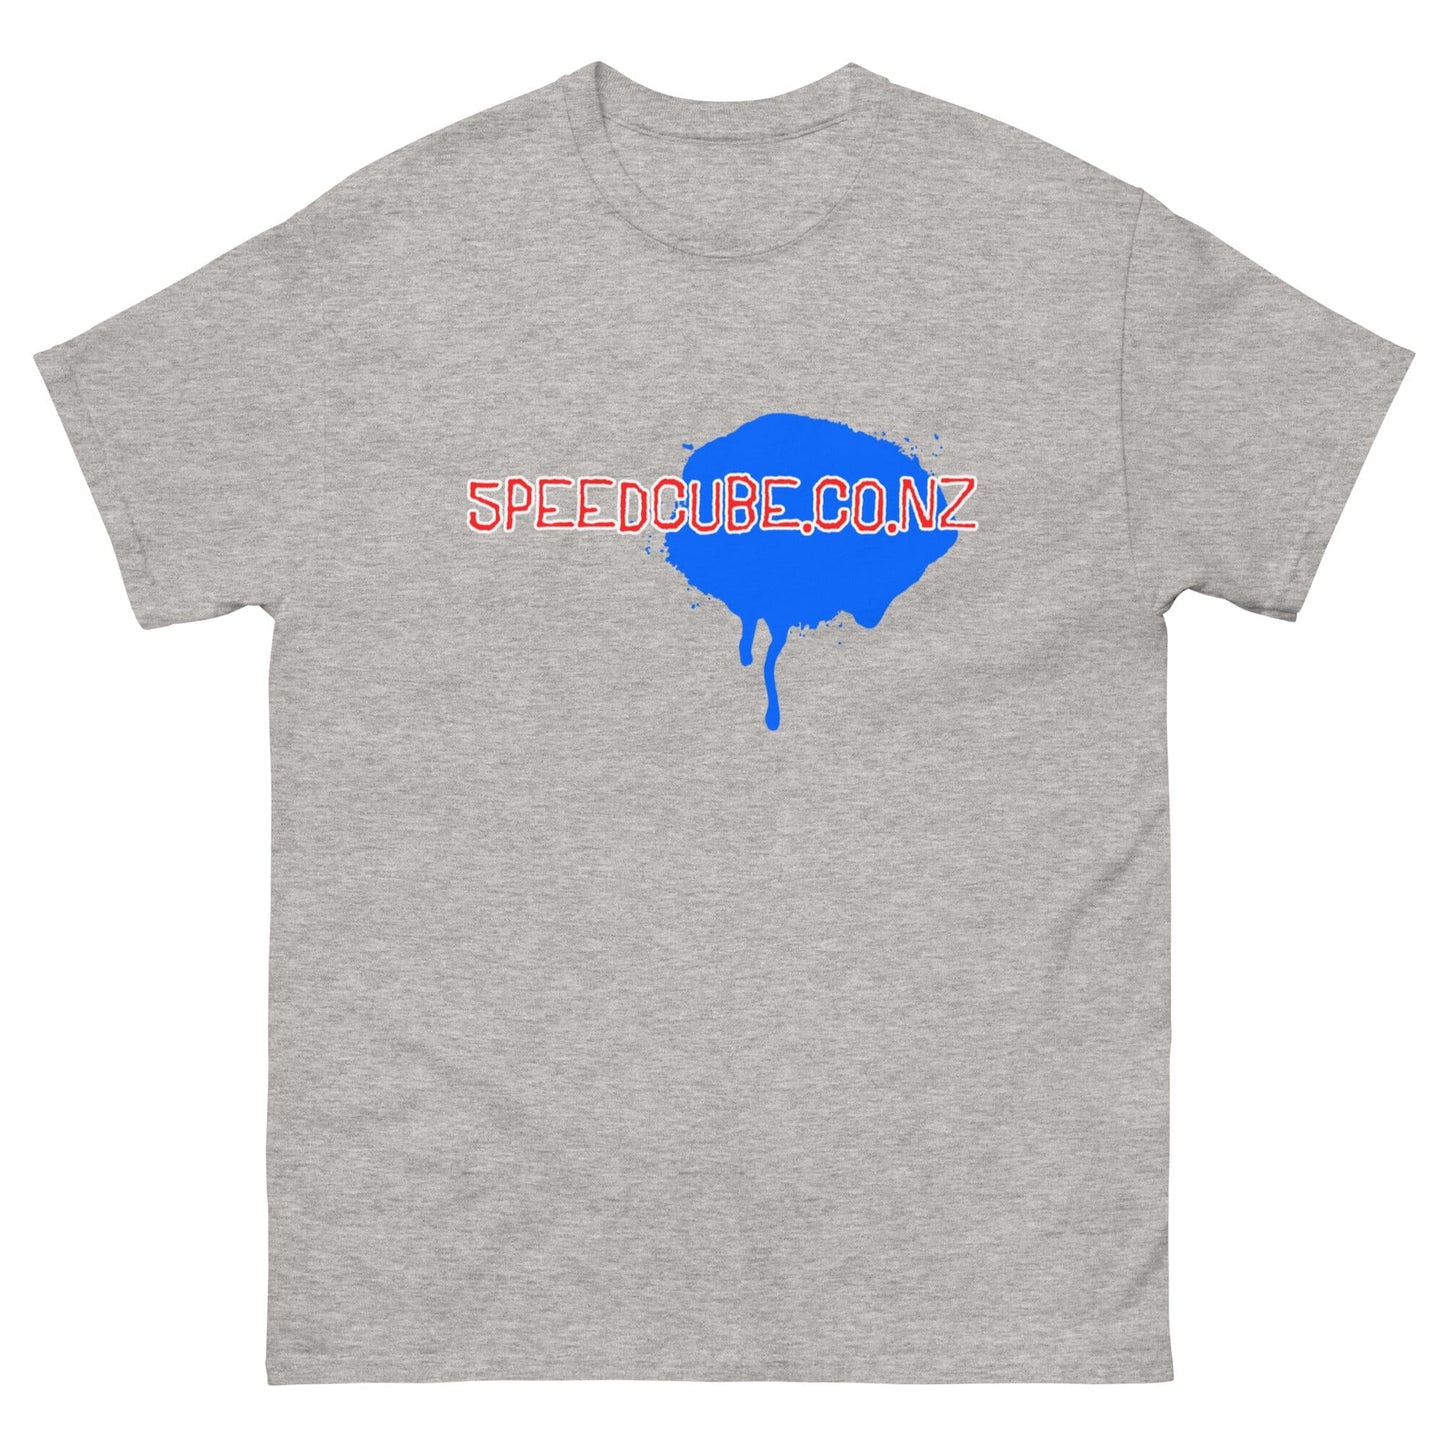 Speedcube.co.nz Paint Splat Logo T-Shirt Grey - Speedcube New Zealand